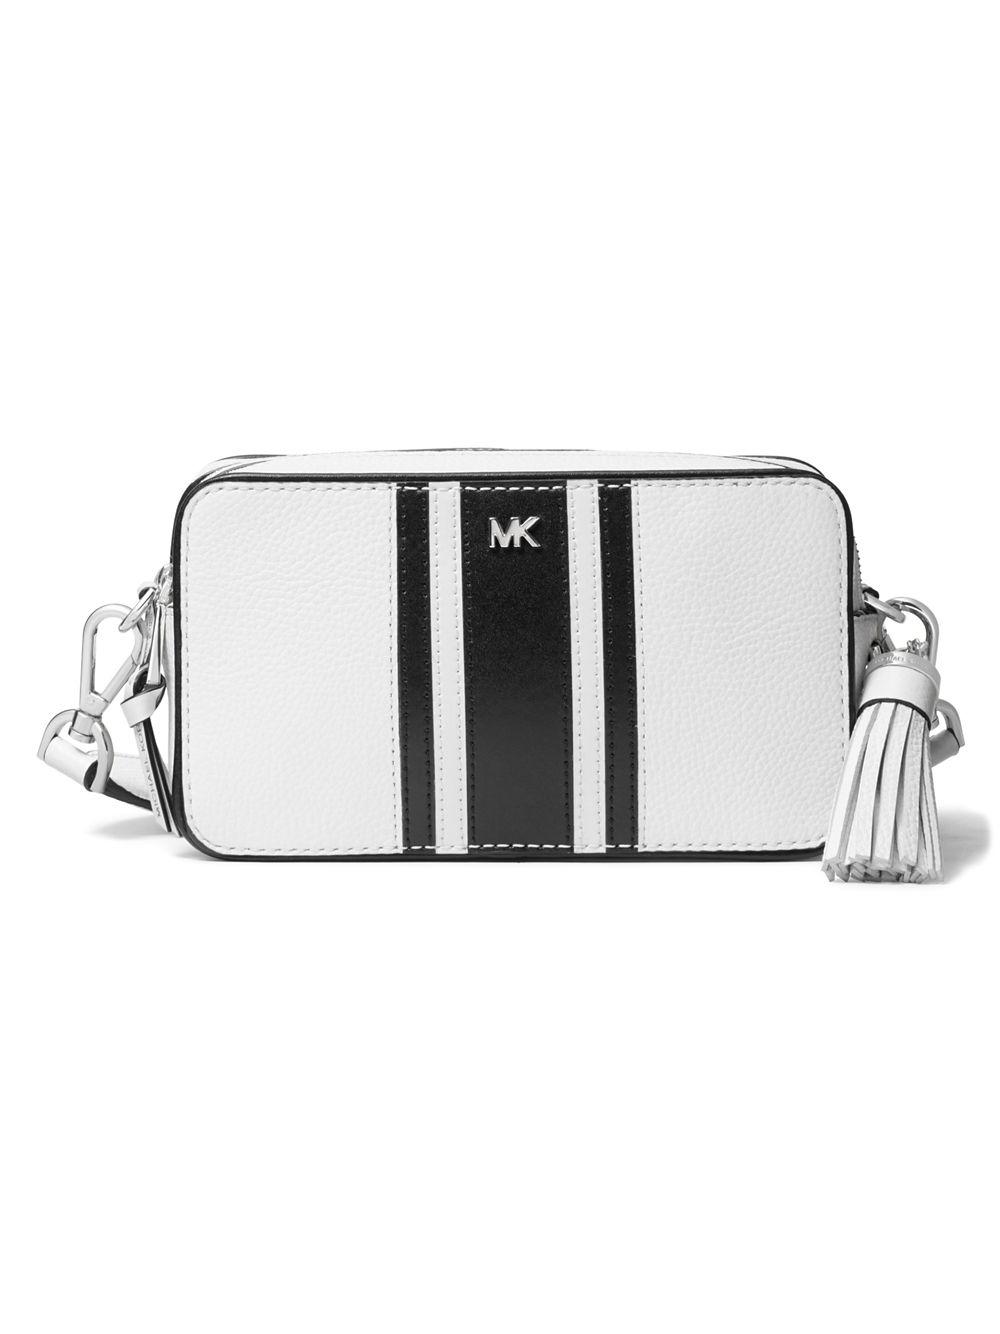 MICHAEL Michael Kors Striped Leather Crossbody Camera Bag in White - Lyst